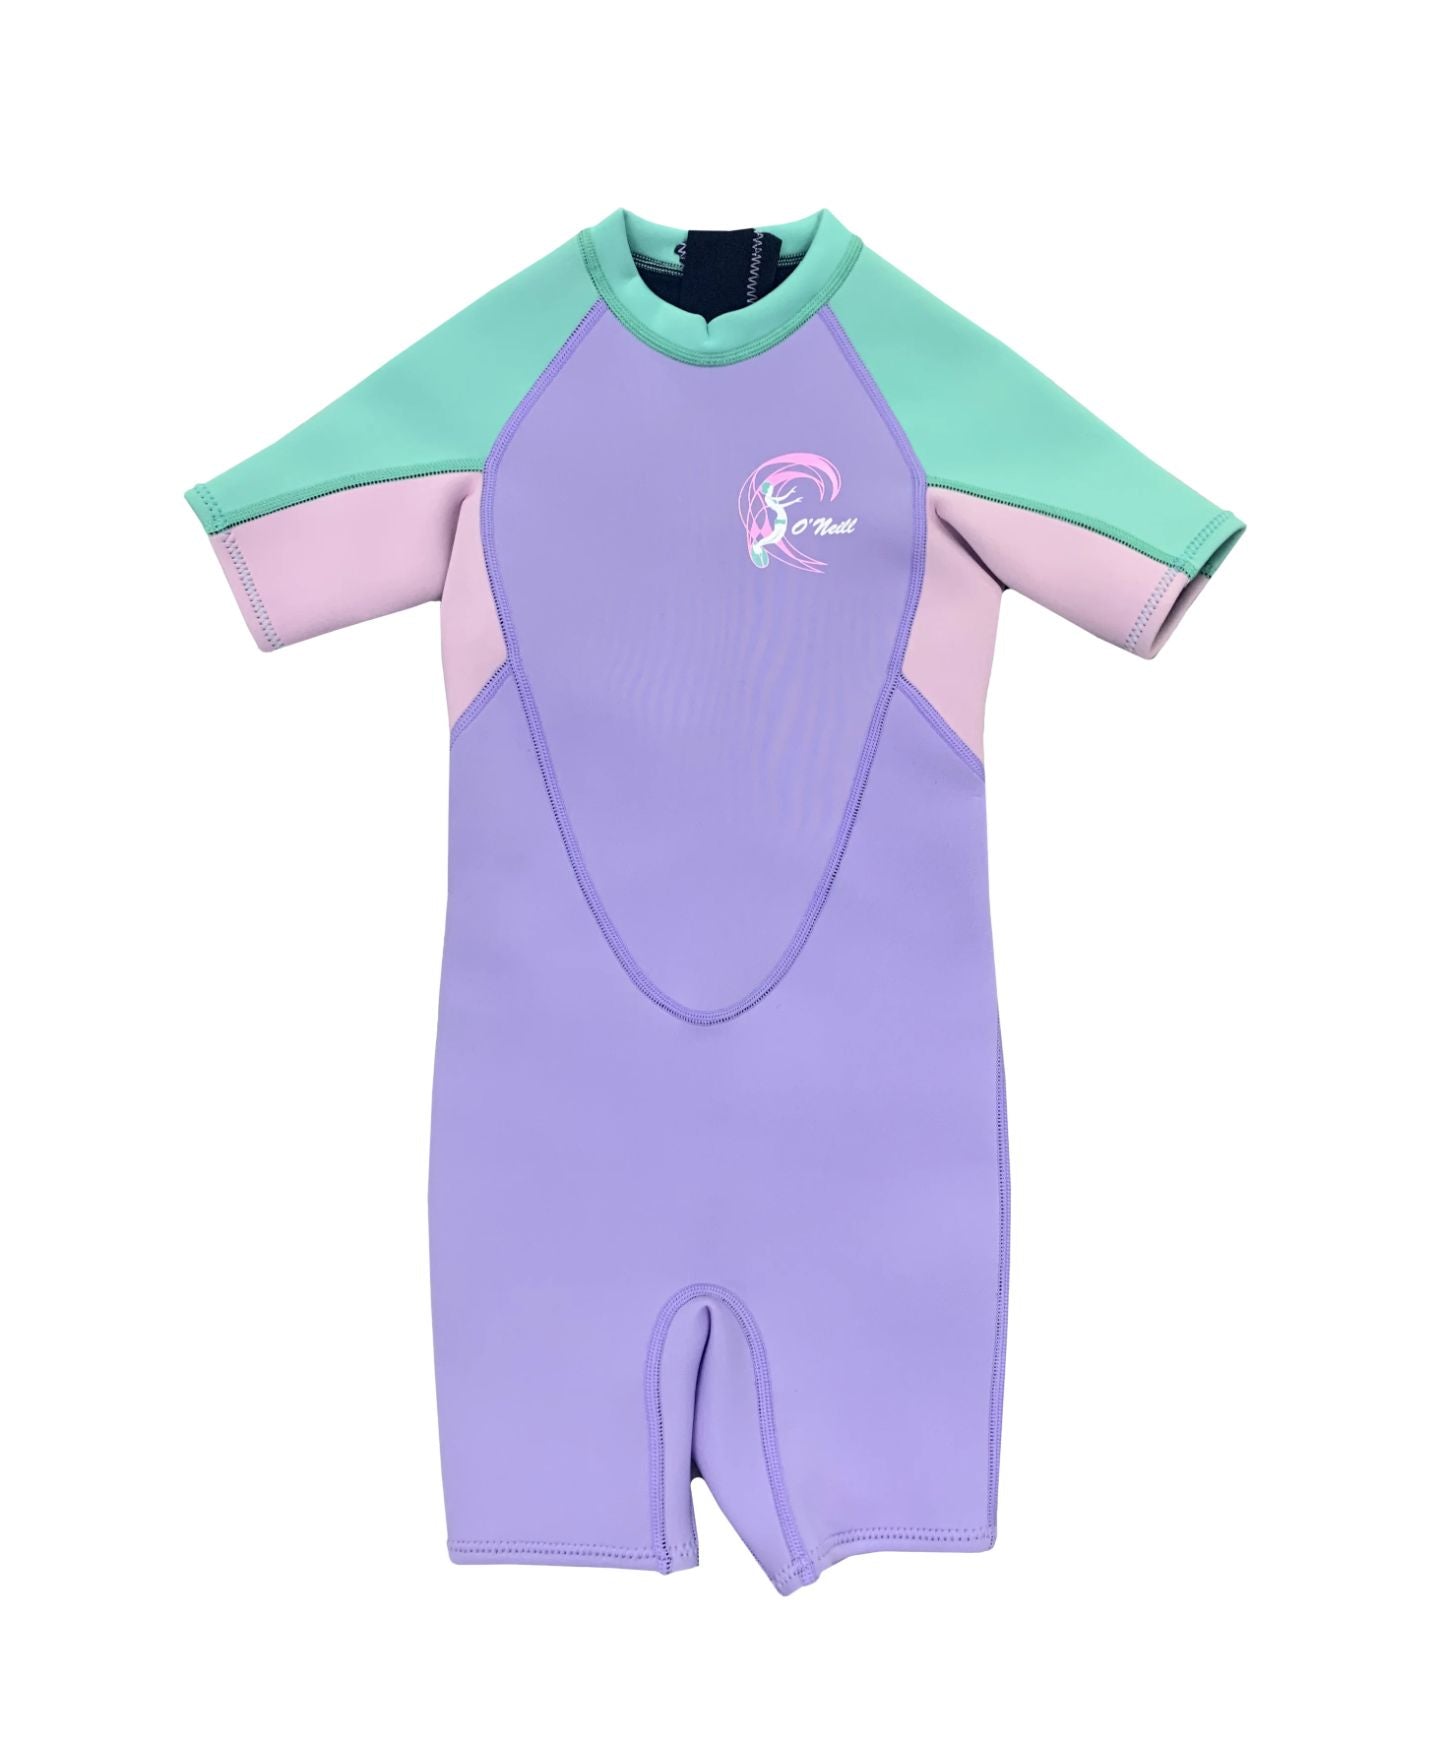 Toddler Reactor Spring Suit Wetsuit - Mist